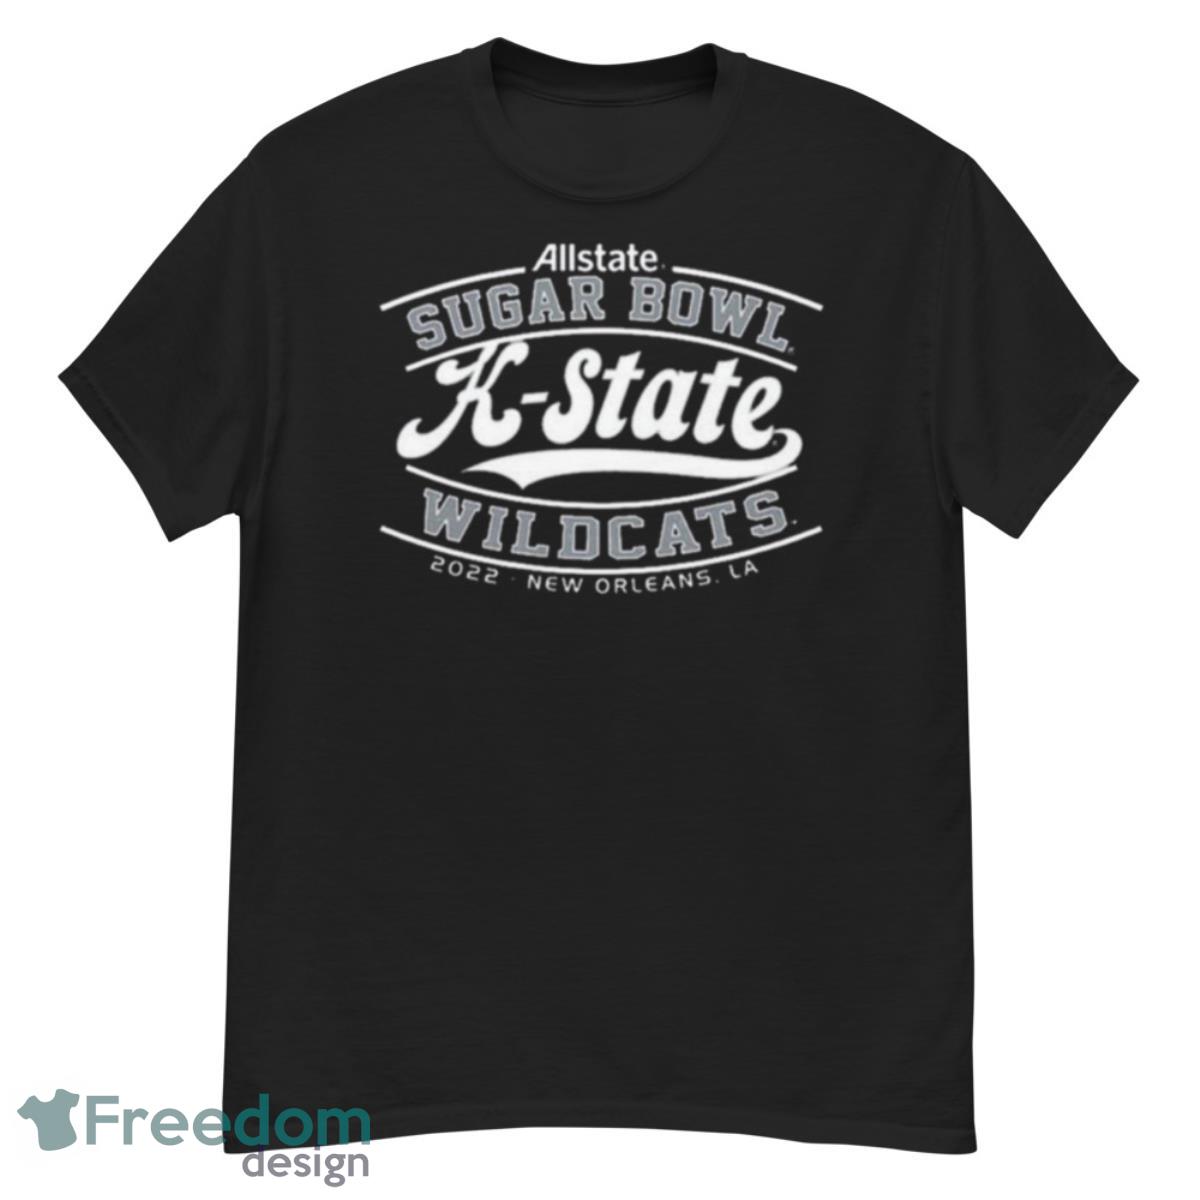 Allstate Sugar Bowl K State Wildcats 2022 New Orleans shirt - G500 Men’s Classic T-Shirt